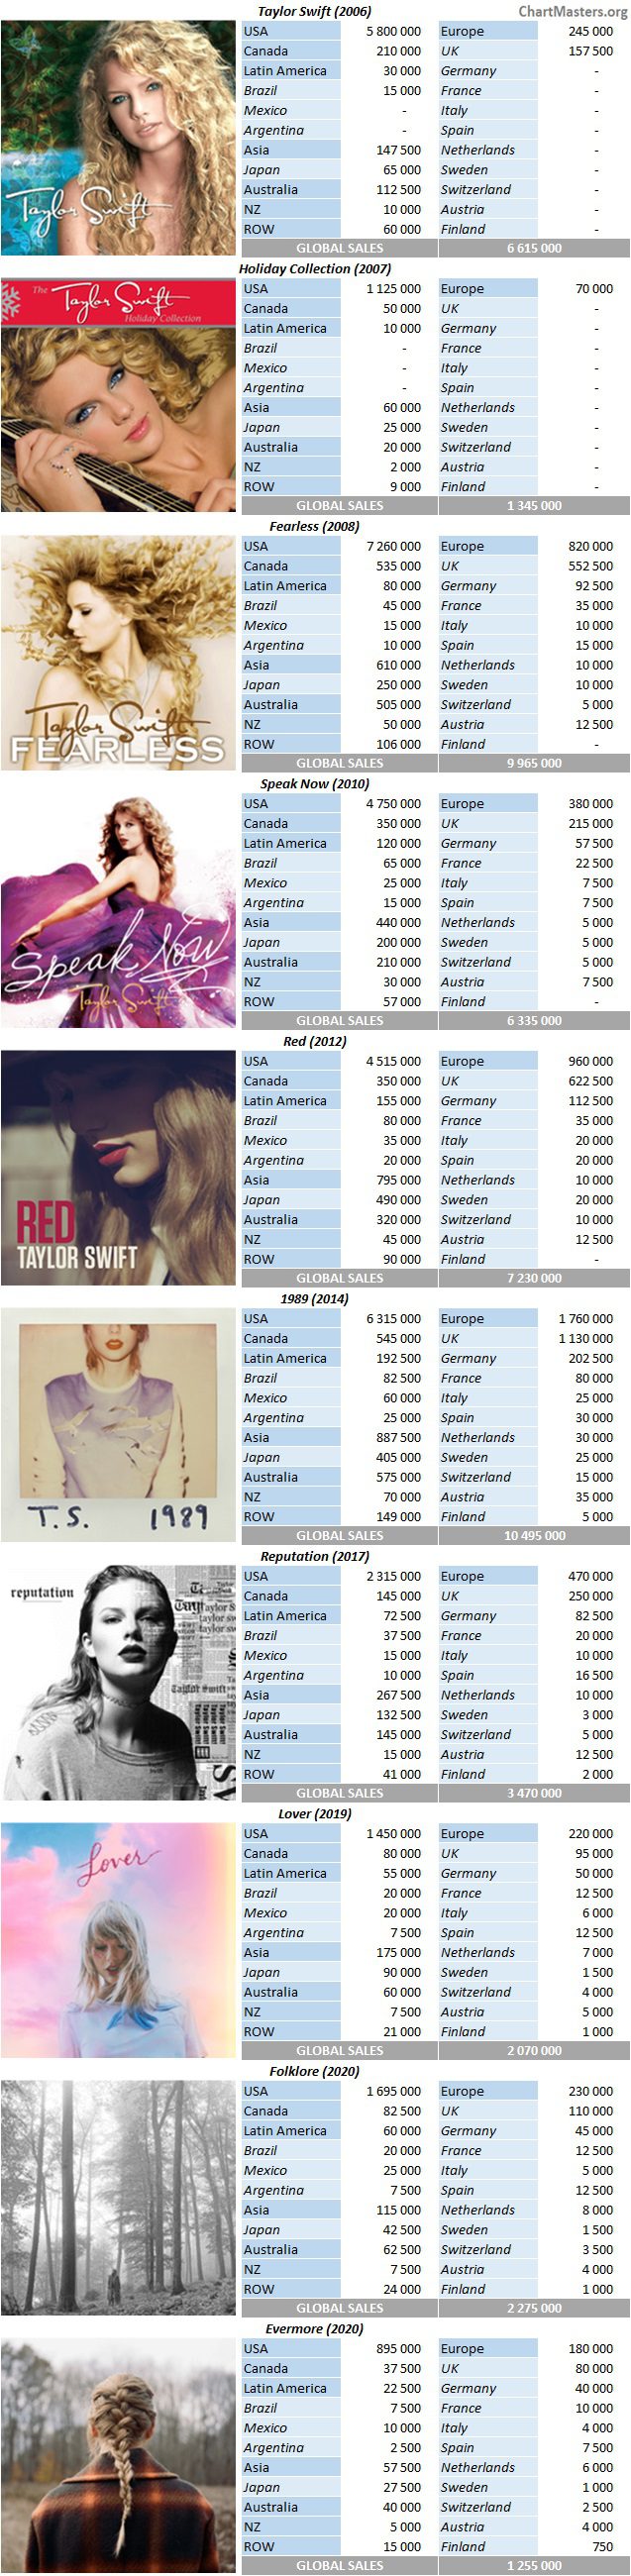 CSPC Taylor Swift 2022 album sales breakdowns